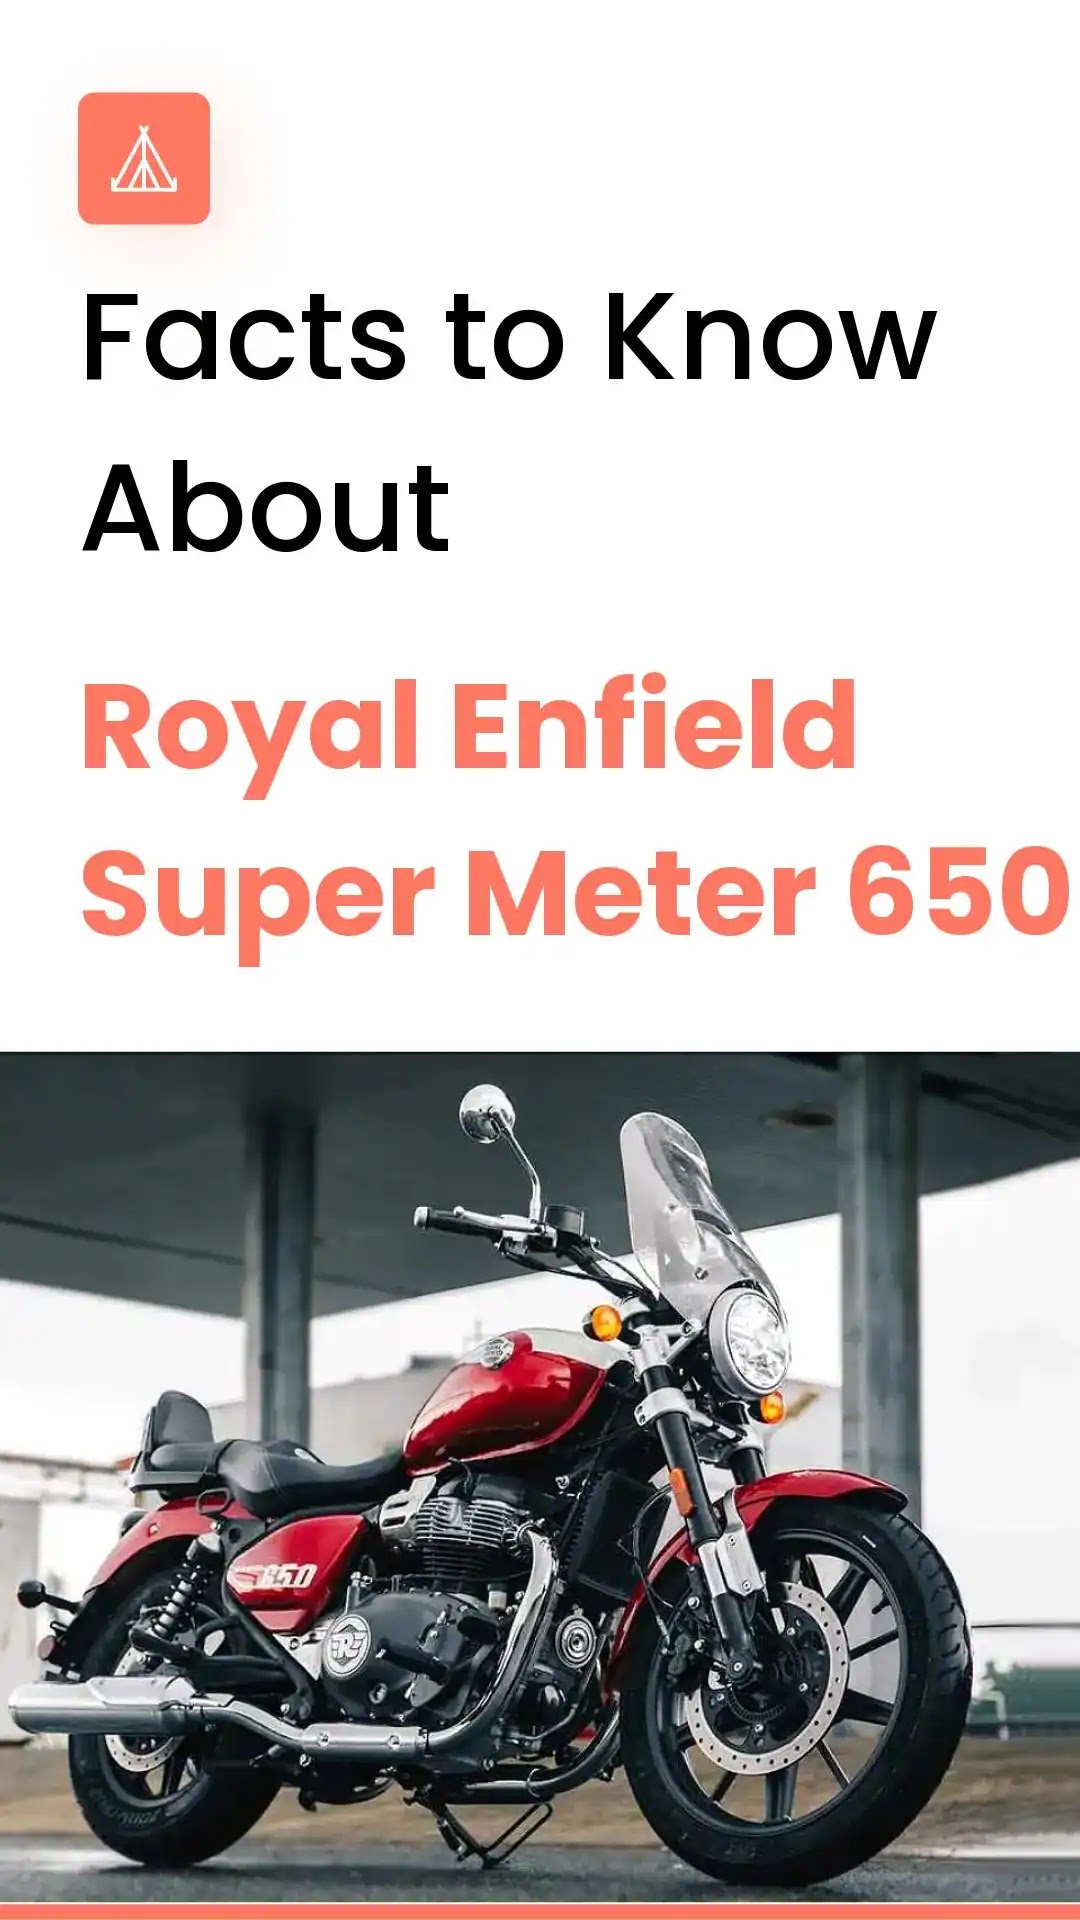 Royal Enfield Super Meteor 650